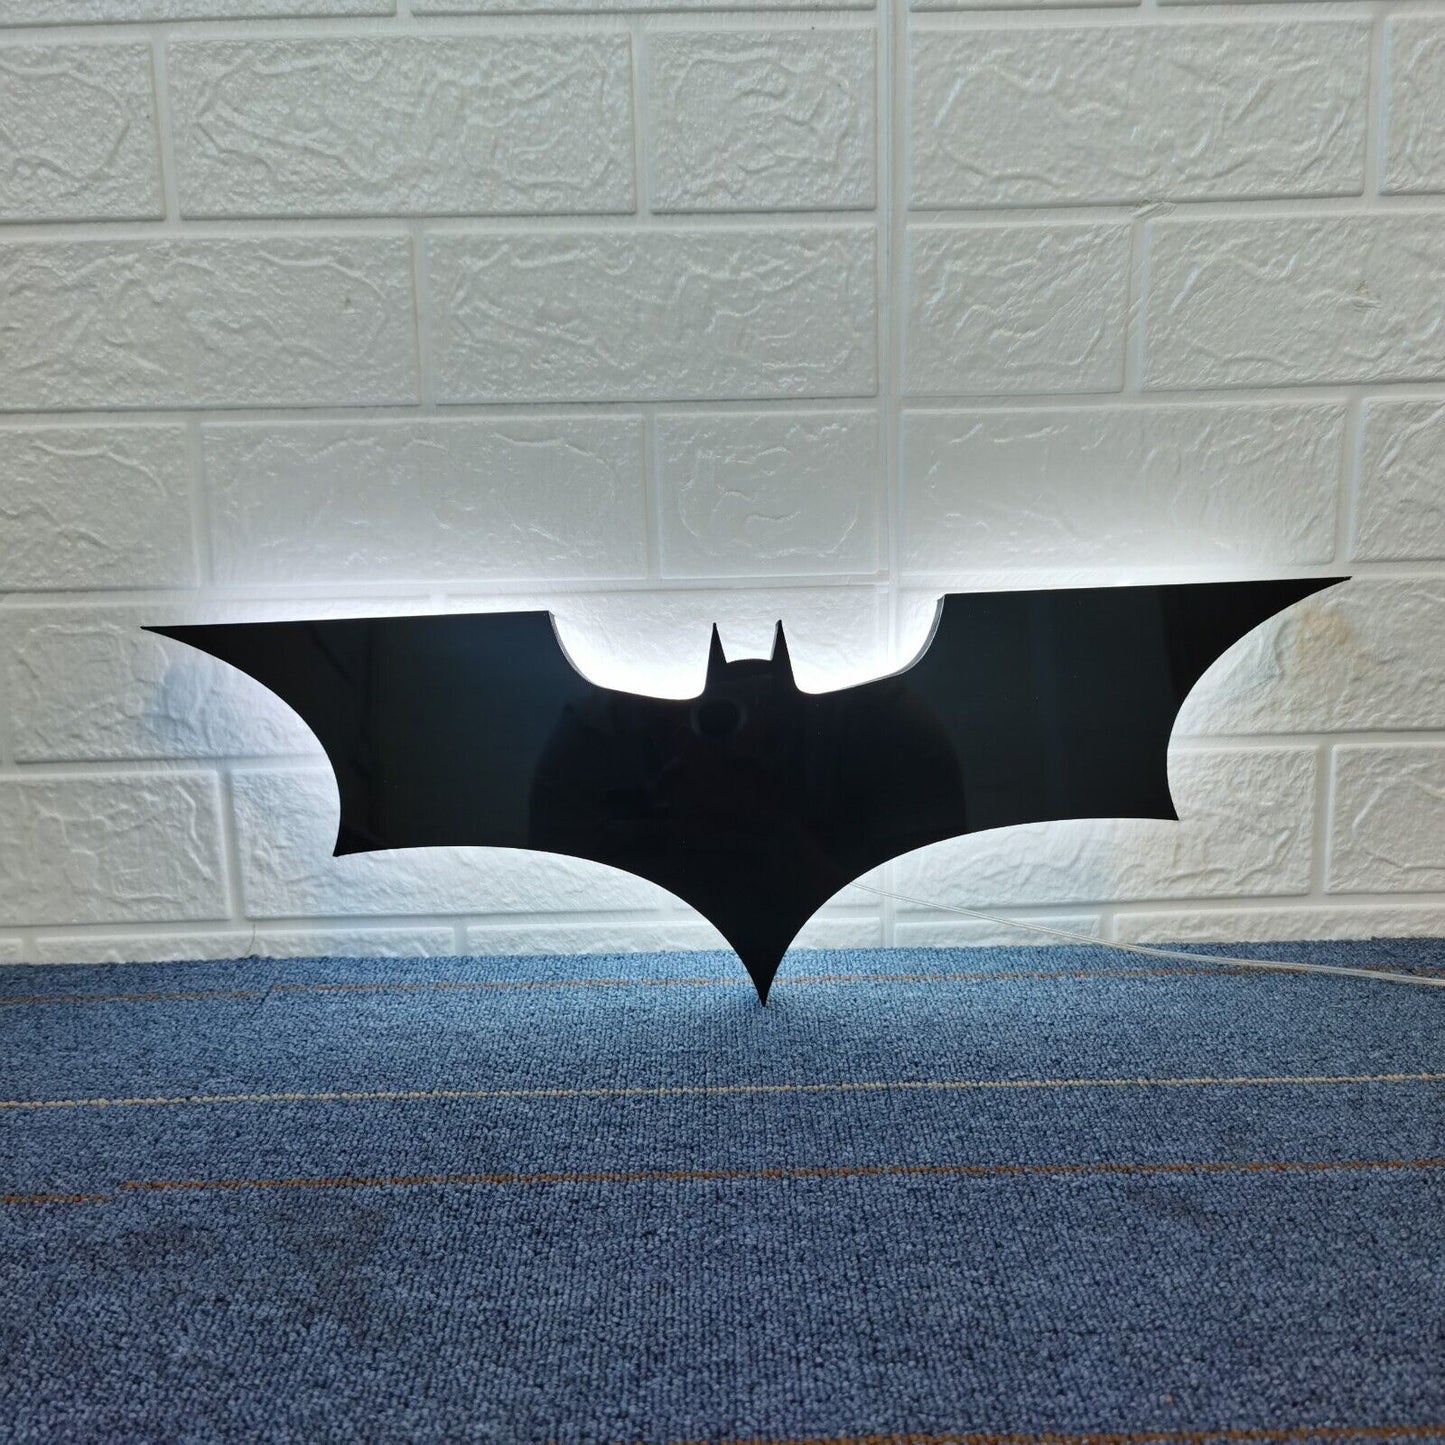 Batman Logo LED Light Box | Fully Dimmable & USB Powered